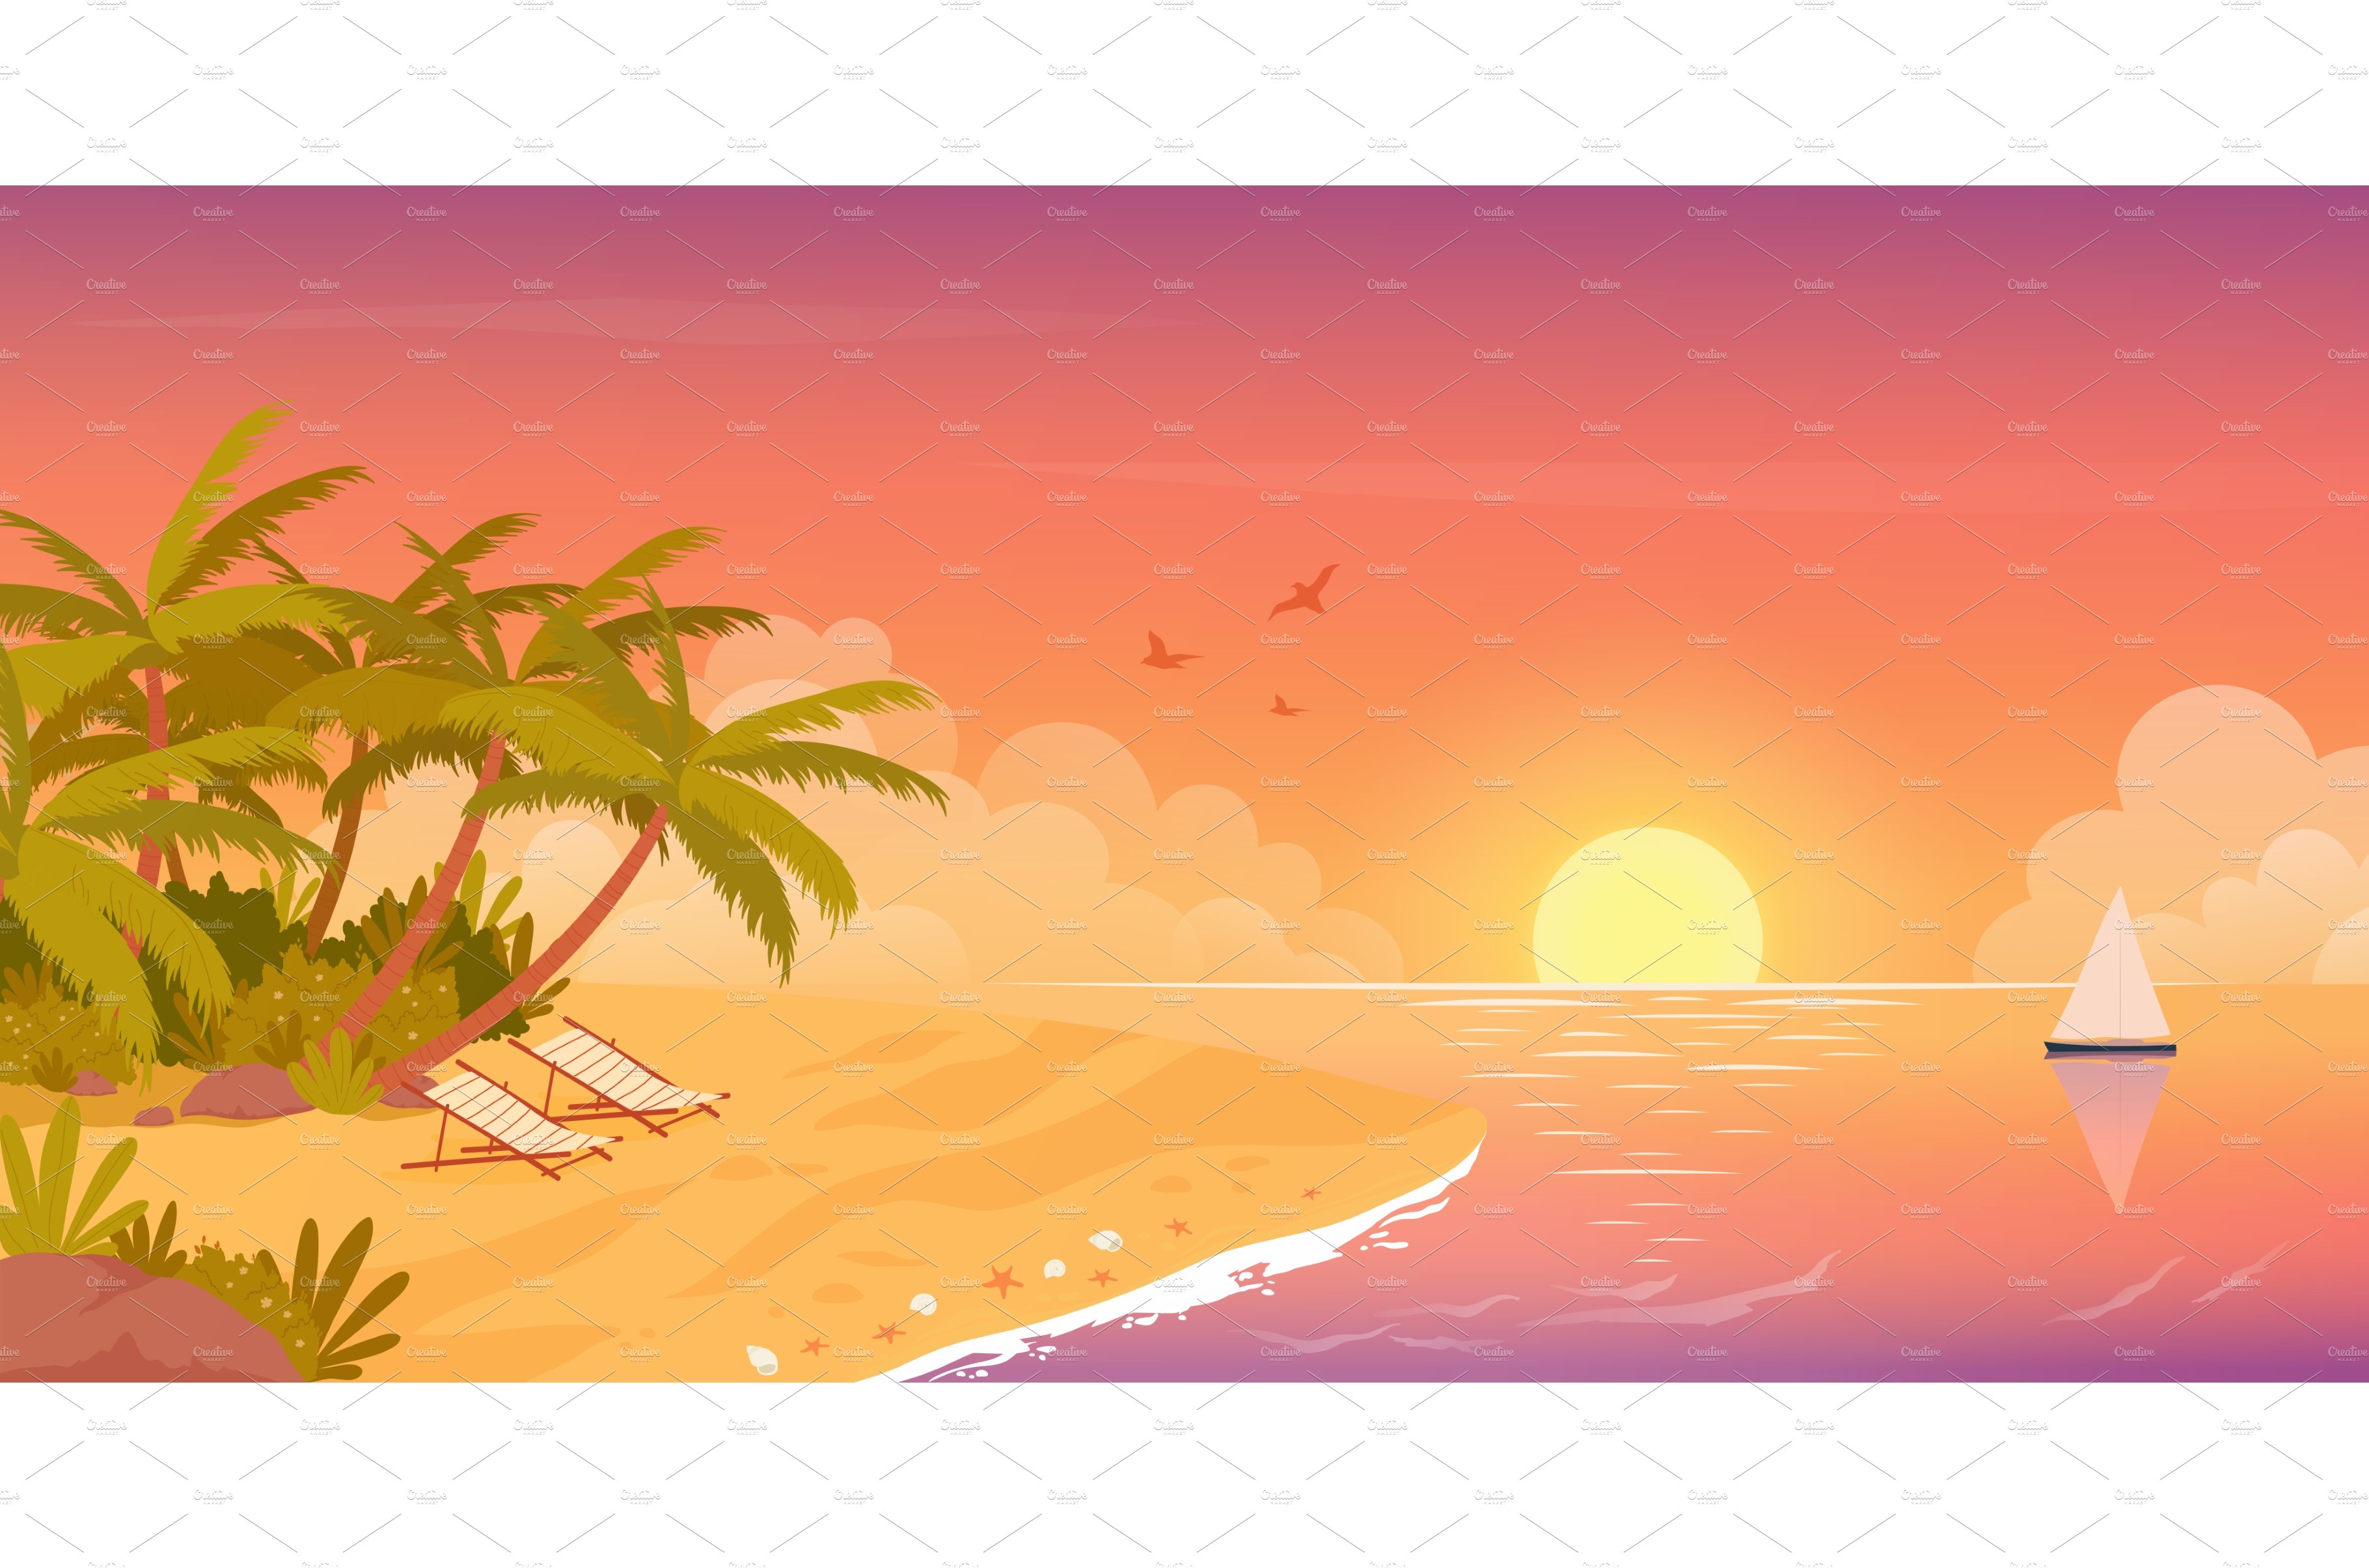 Beach calm sunset seaside landscape cover image.